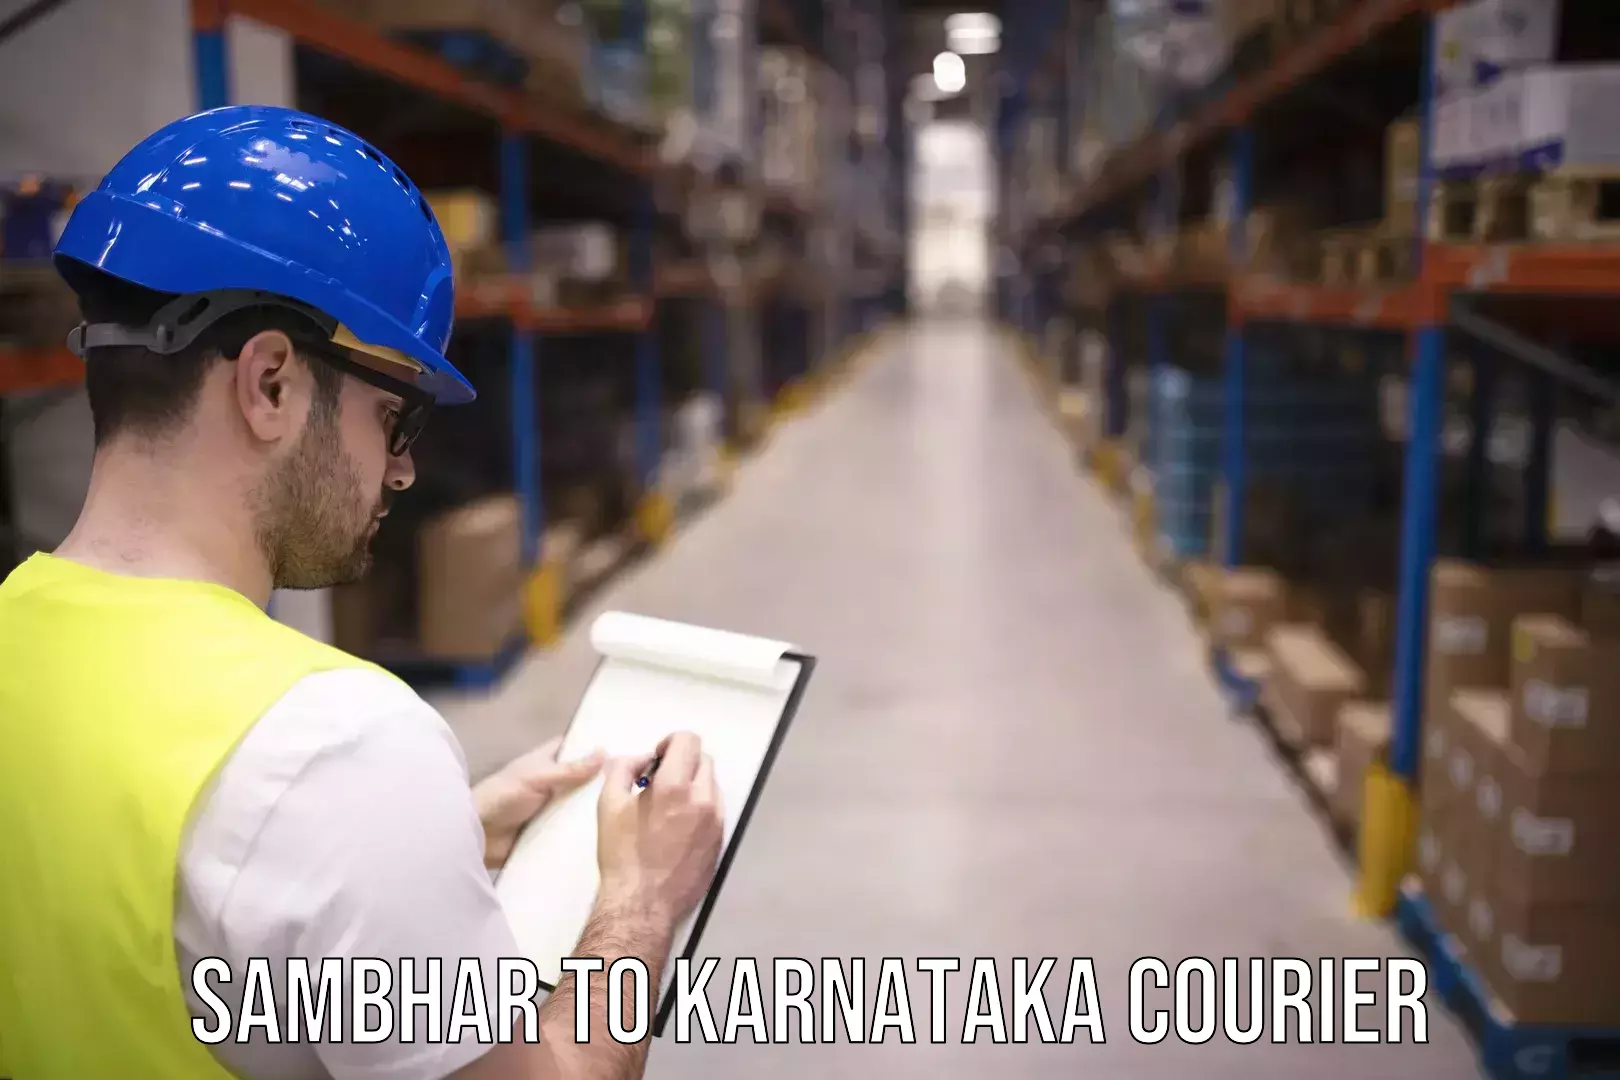 Efficient courier operations Sambhar to Karnataka